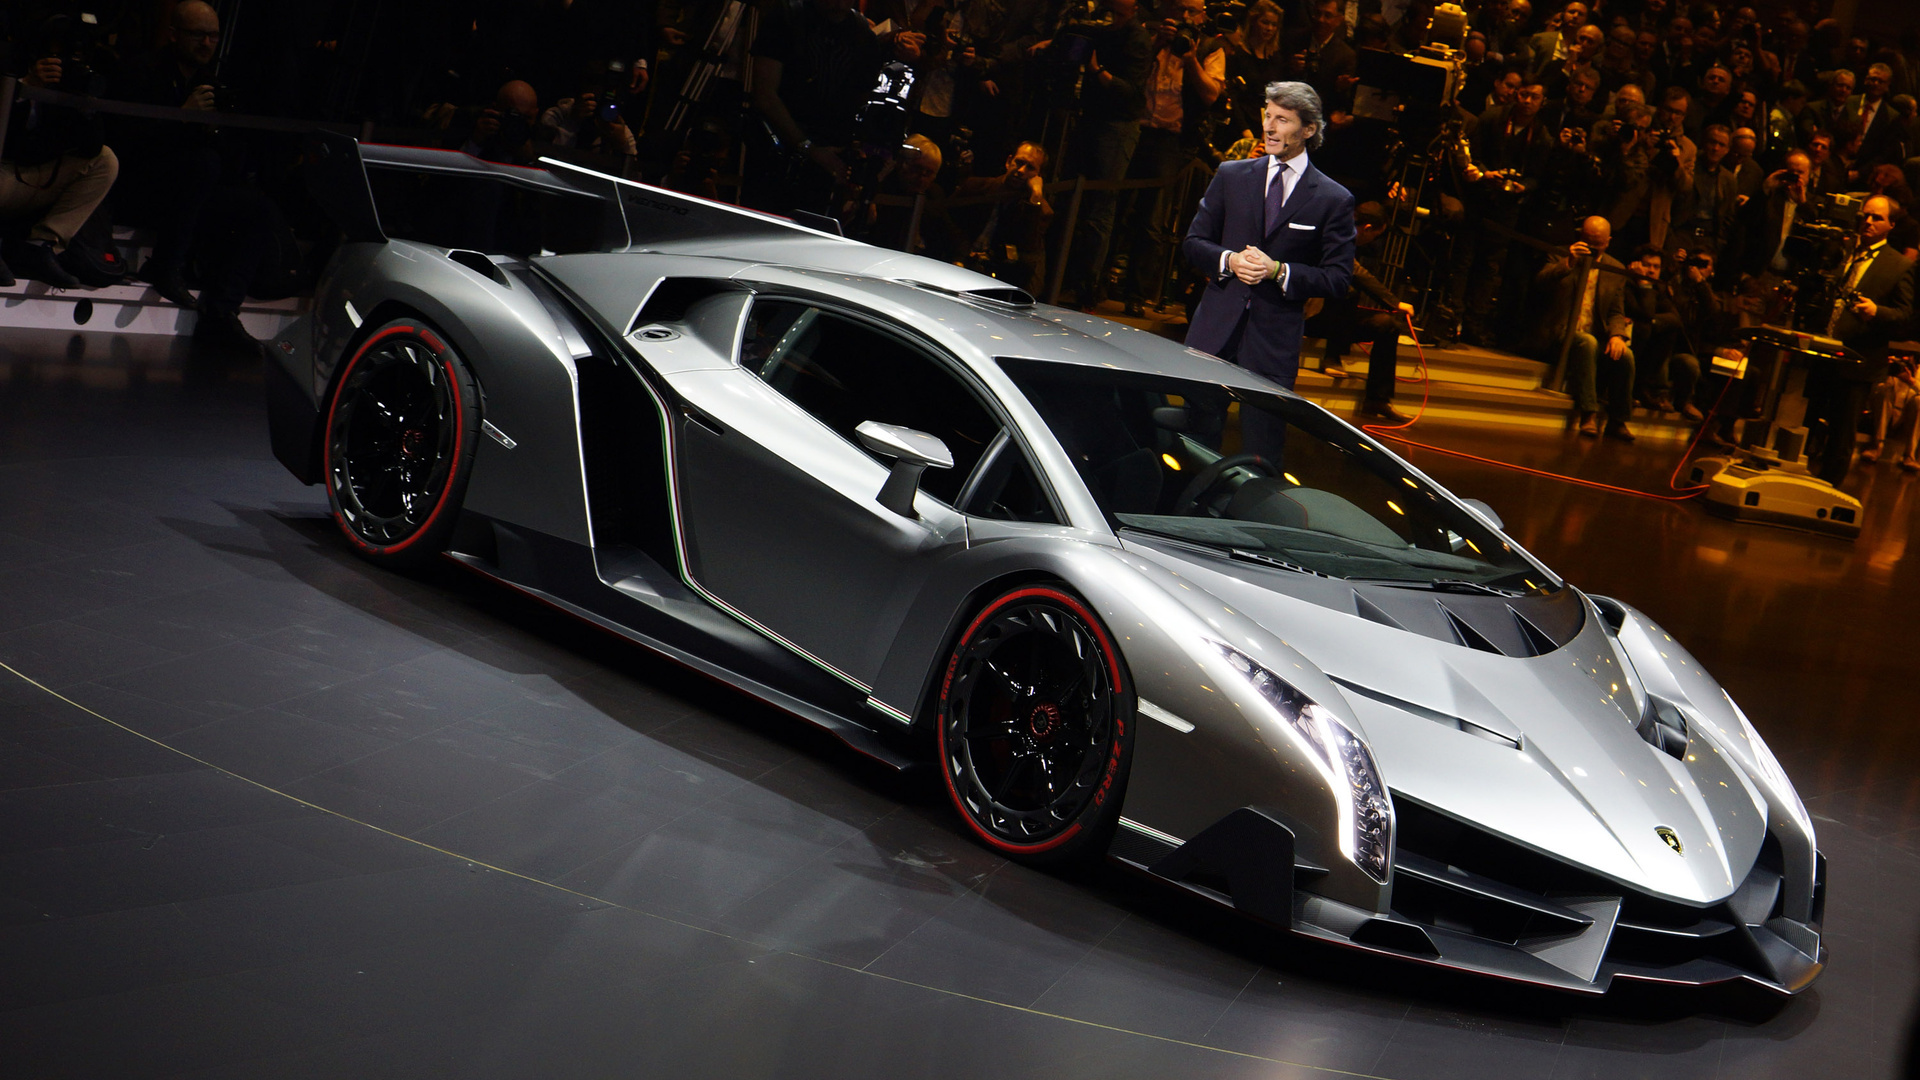 Lamborghini Veneno Wallpapers Images Photos Pictures ...